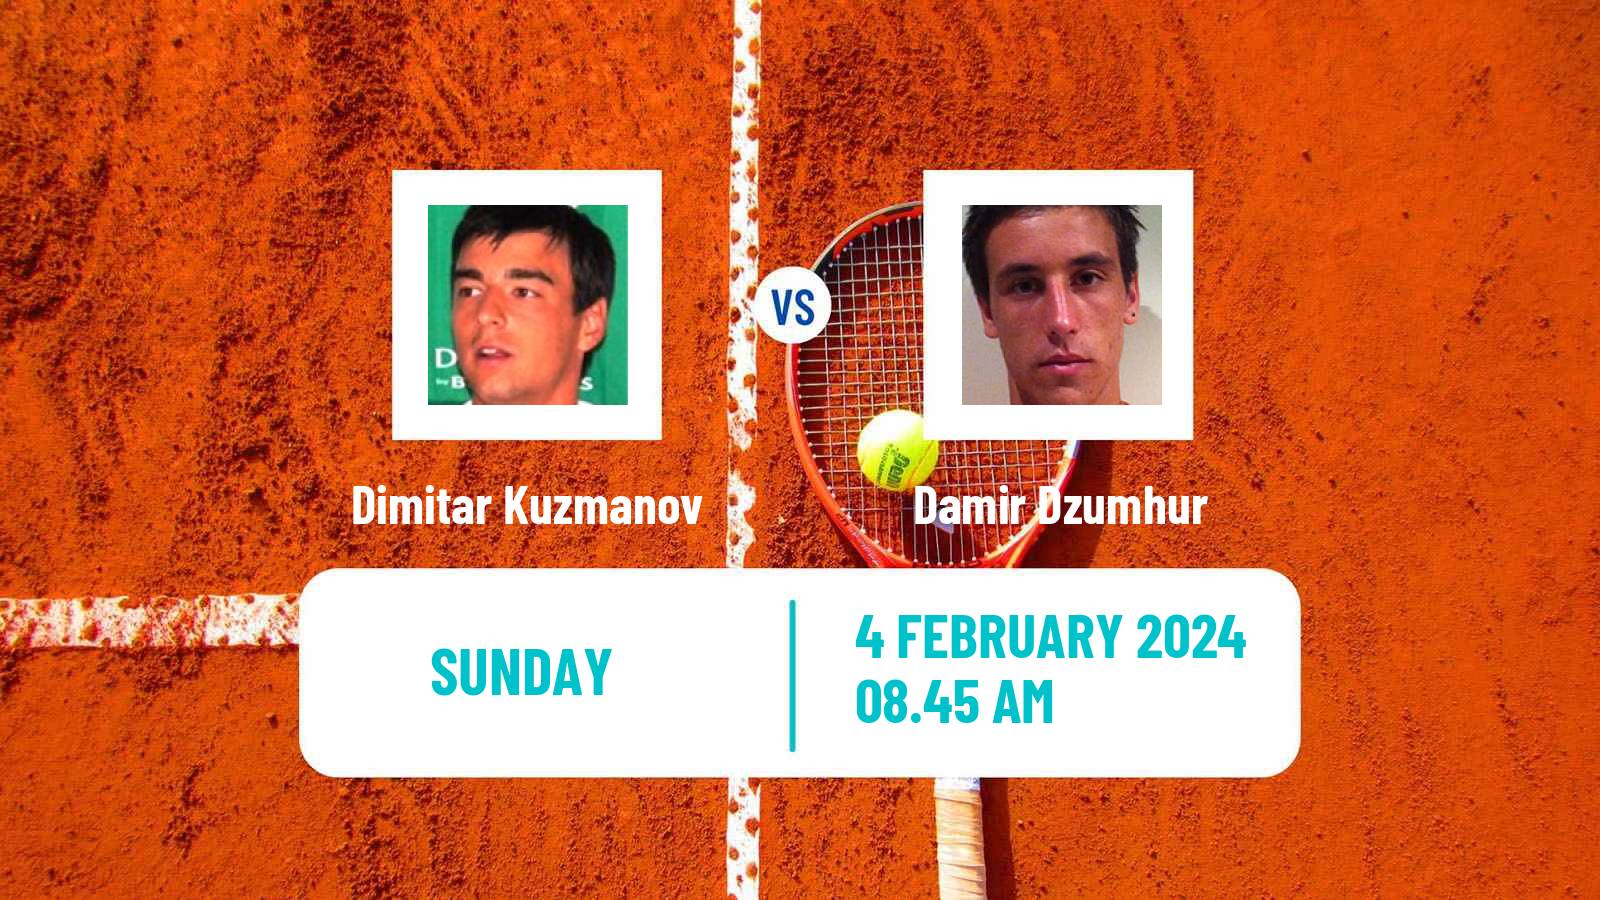 Tennis Davis Cup World Group I Dimitar Kuzmanov - Damir Dzumhur